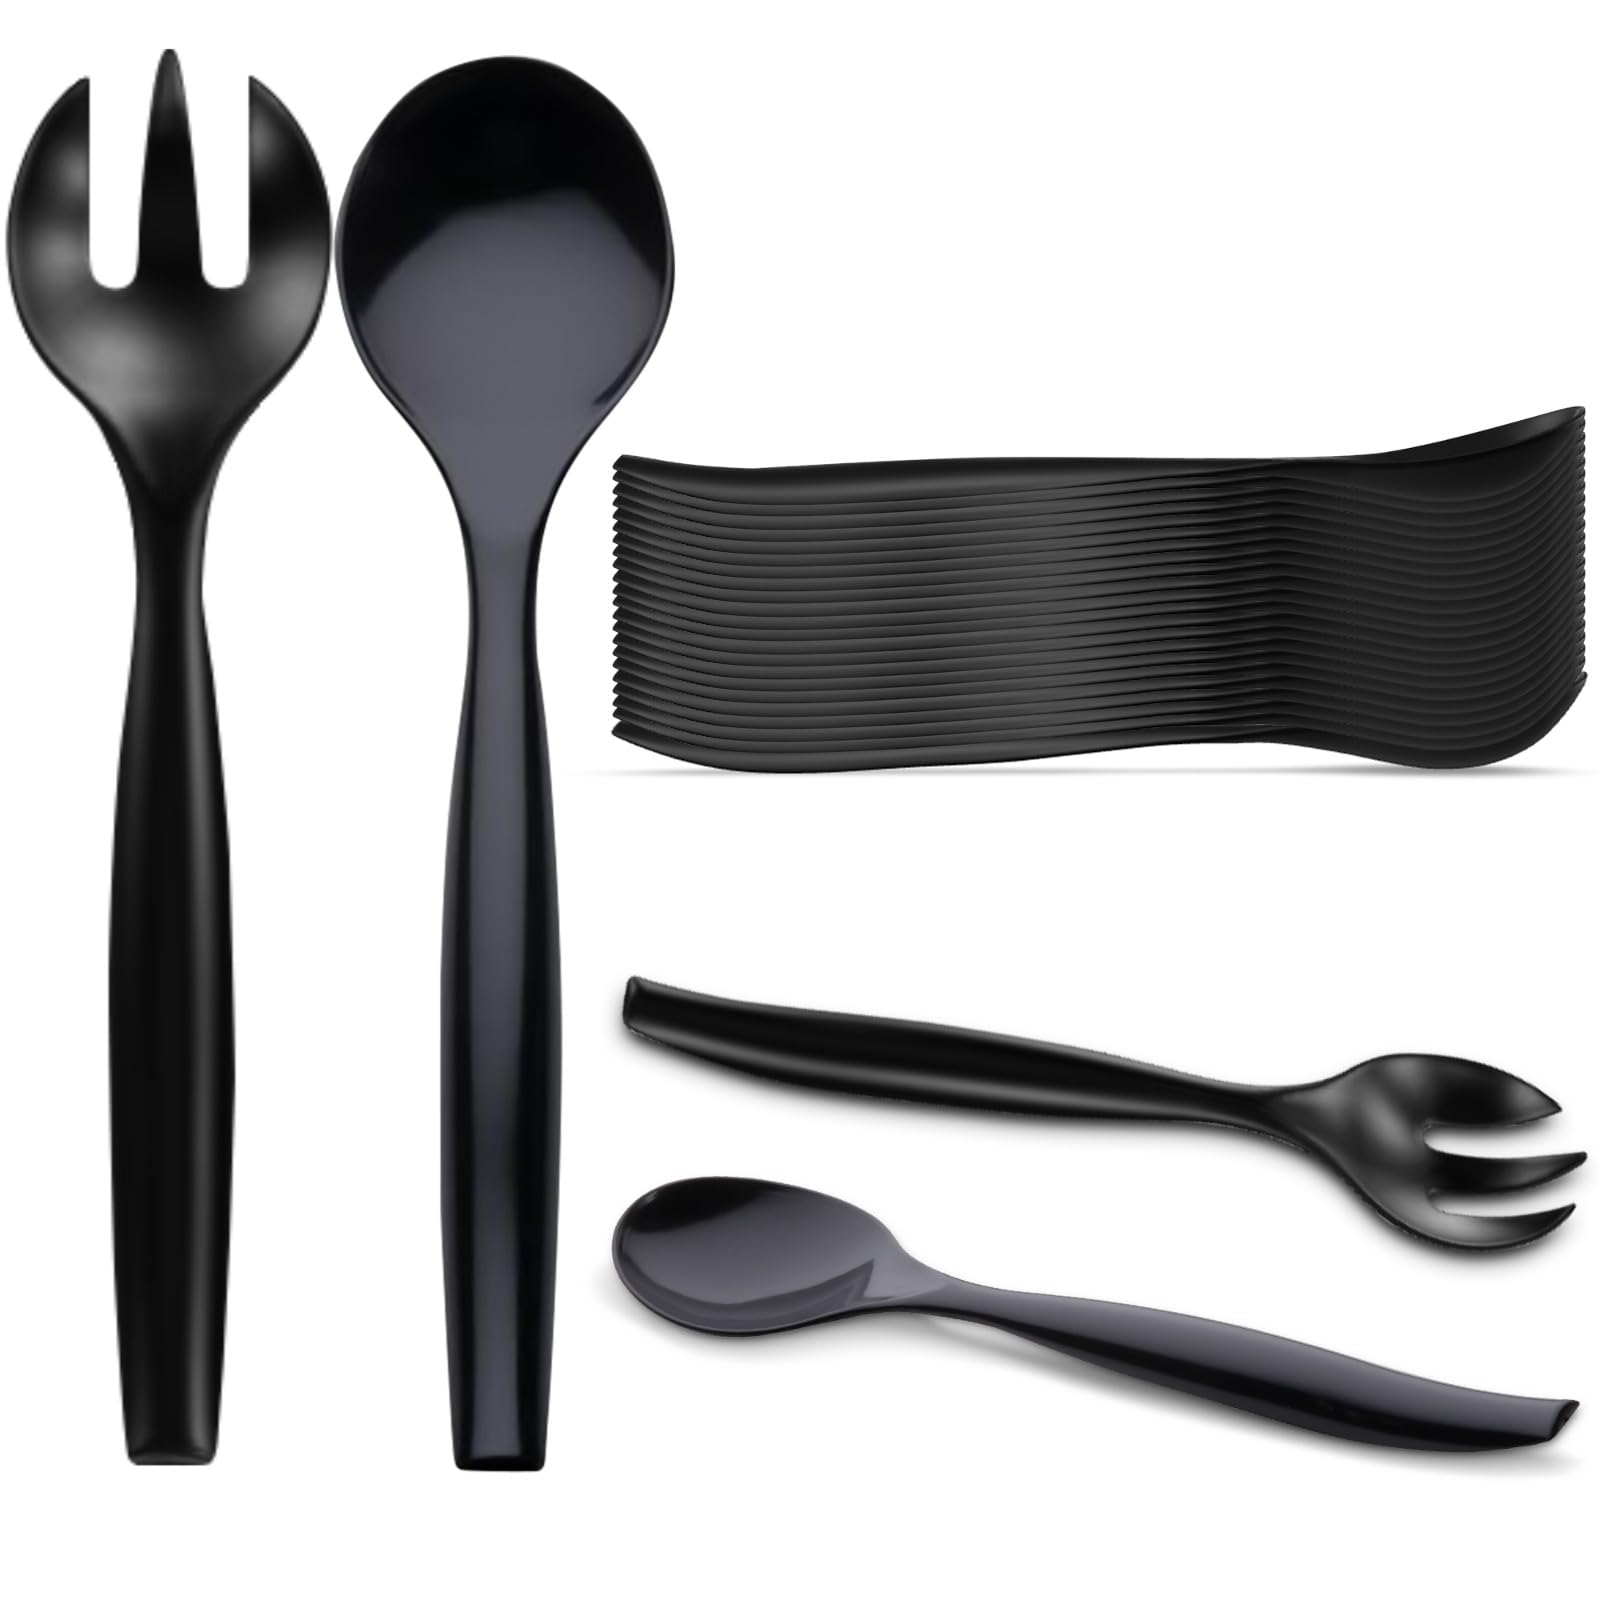 Plastic Spoons - Black Disposable Spoons